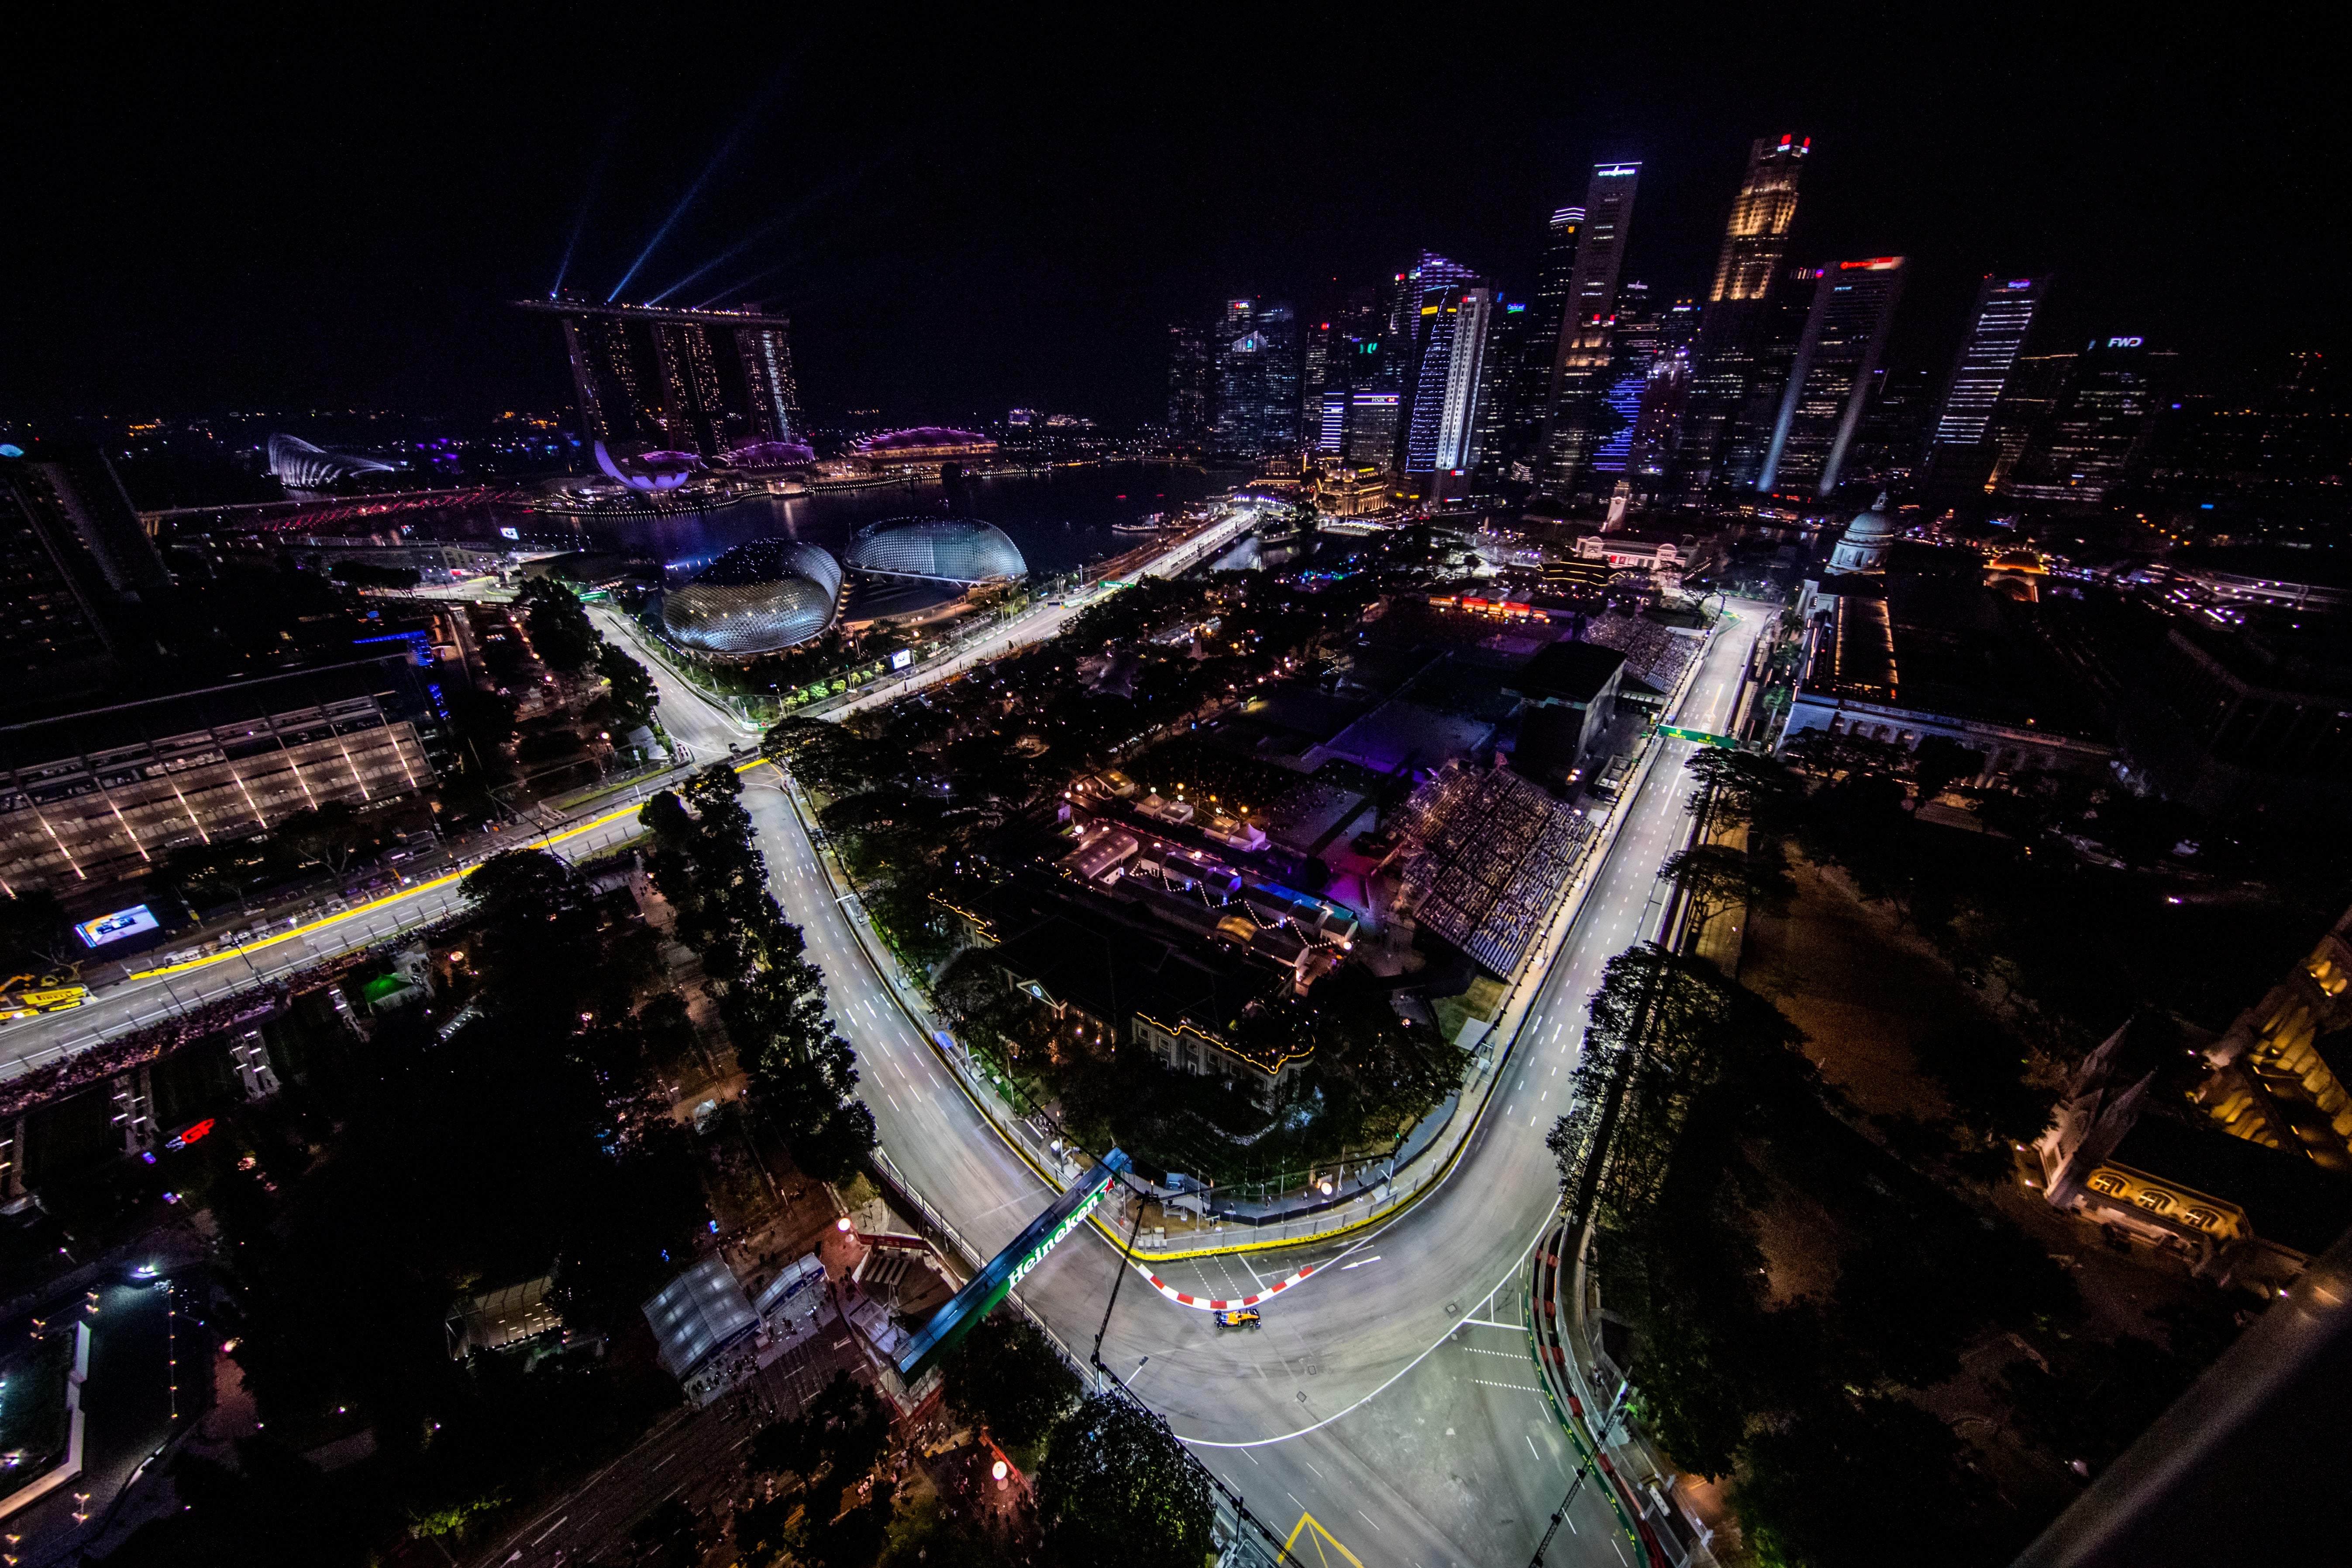 The Marina Bay Street Circuit is home to Formula 1’s original ‘night race’